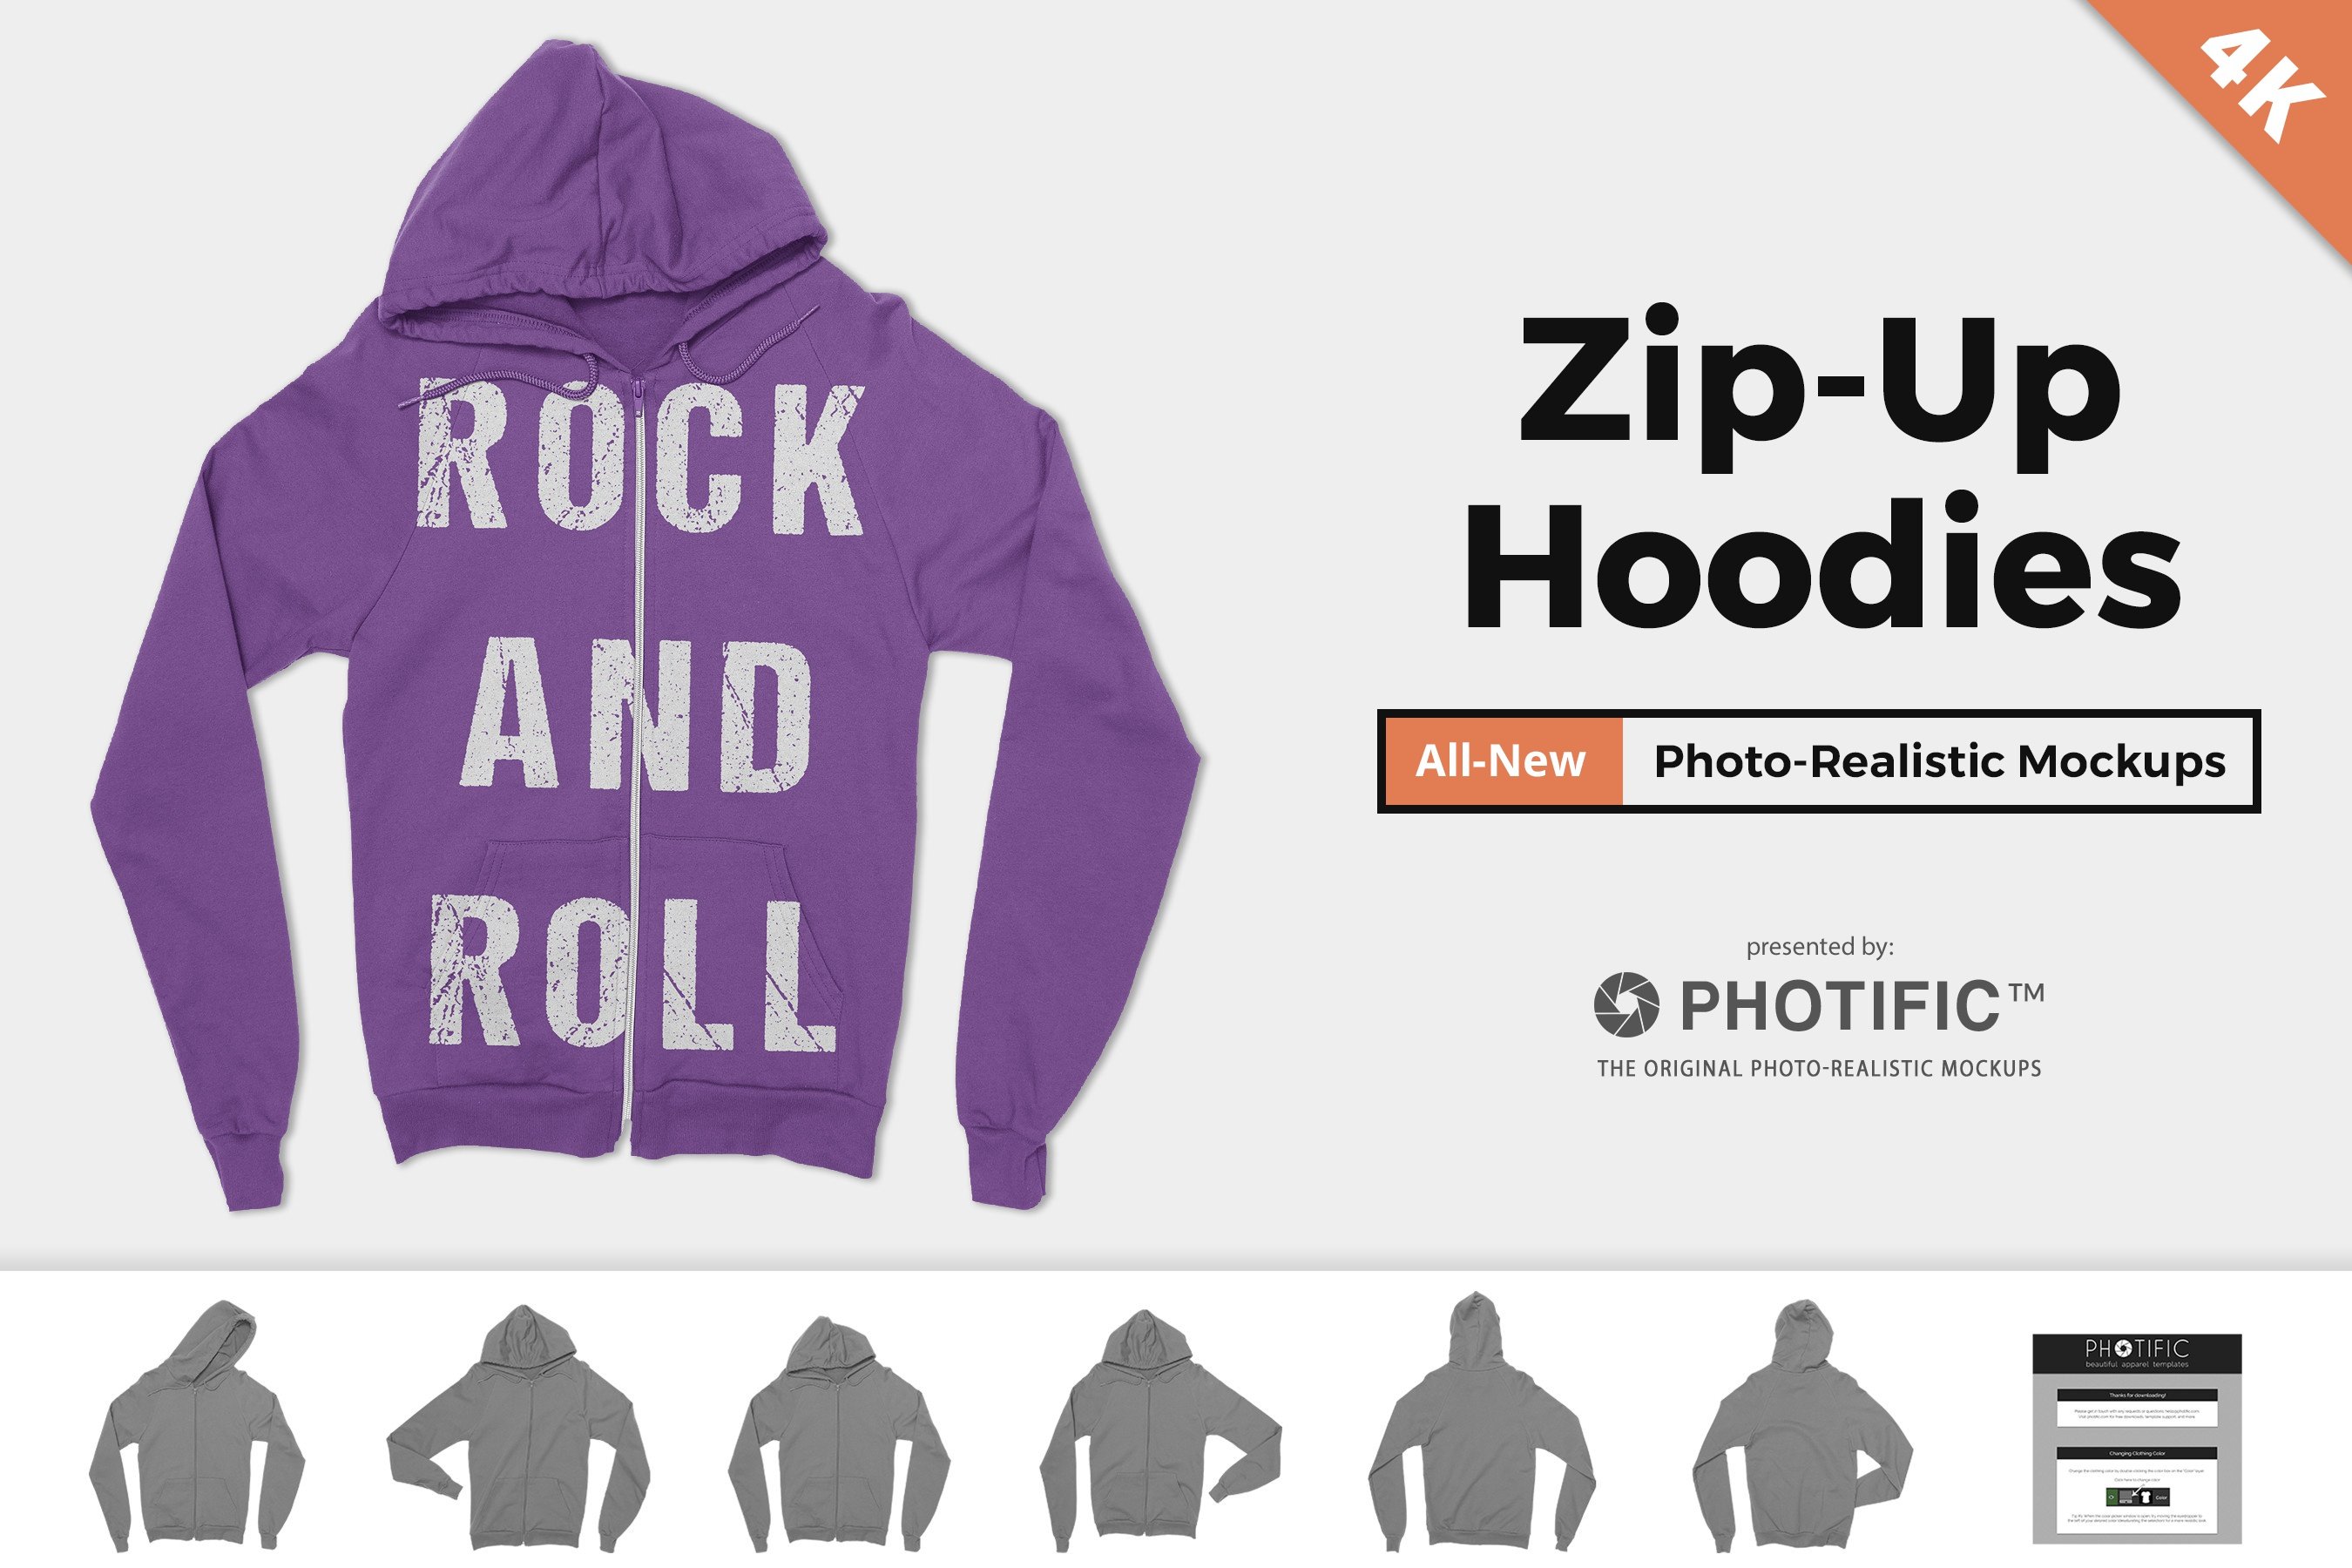 Zip-Up Hoodie Sweatshirt Mockups cover image.